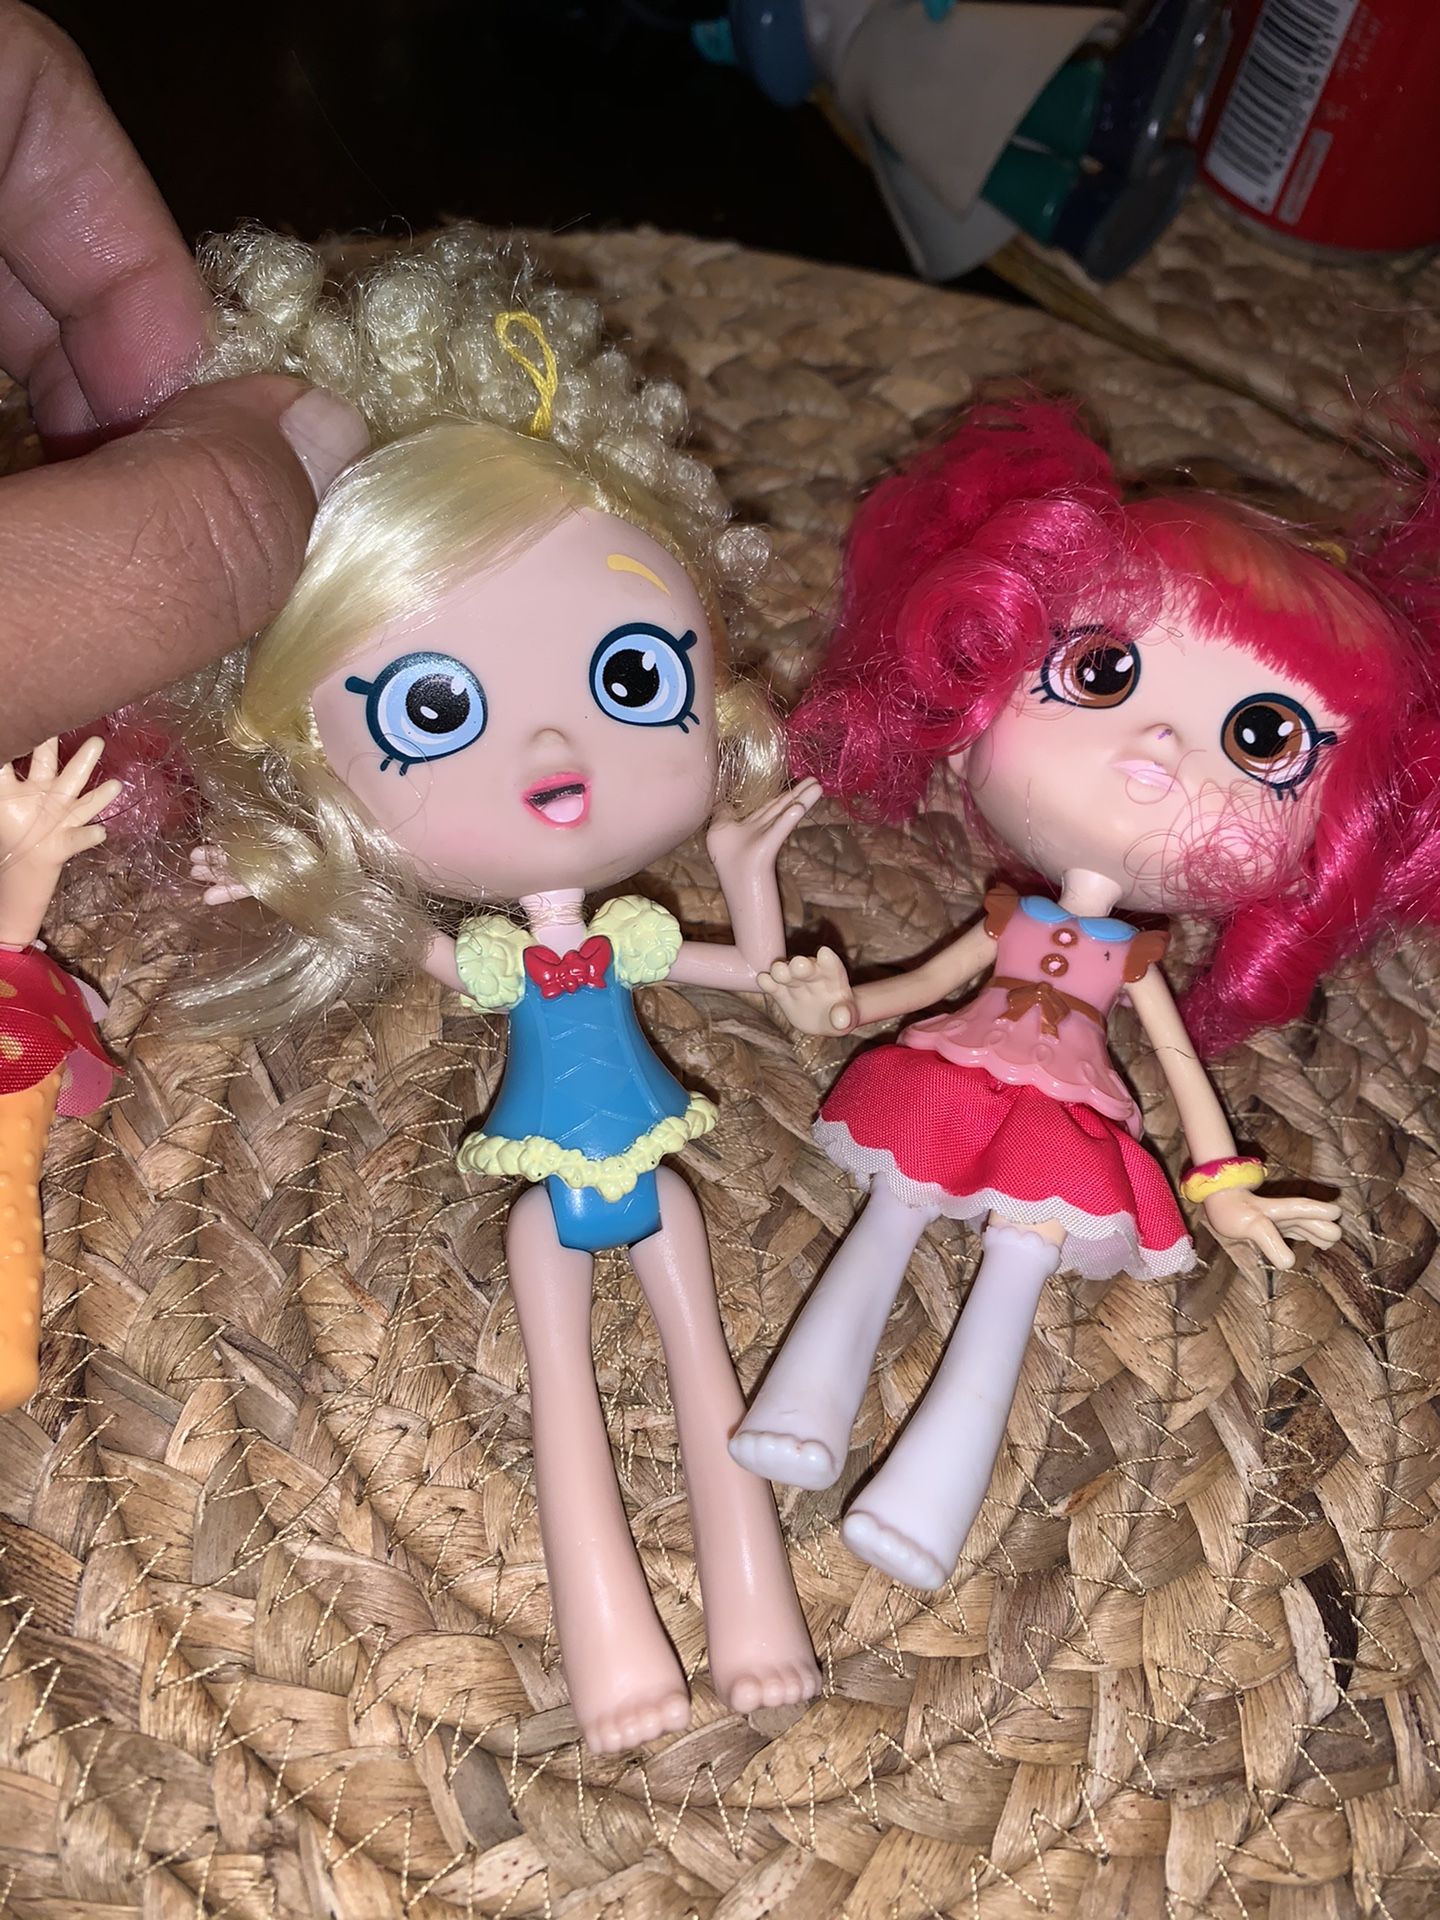 Shopkins dolls used